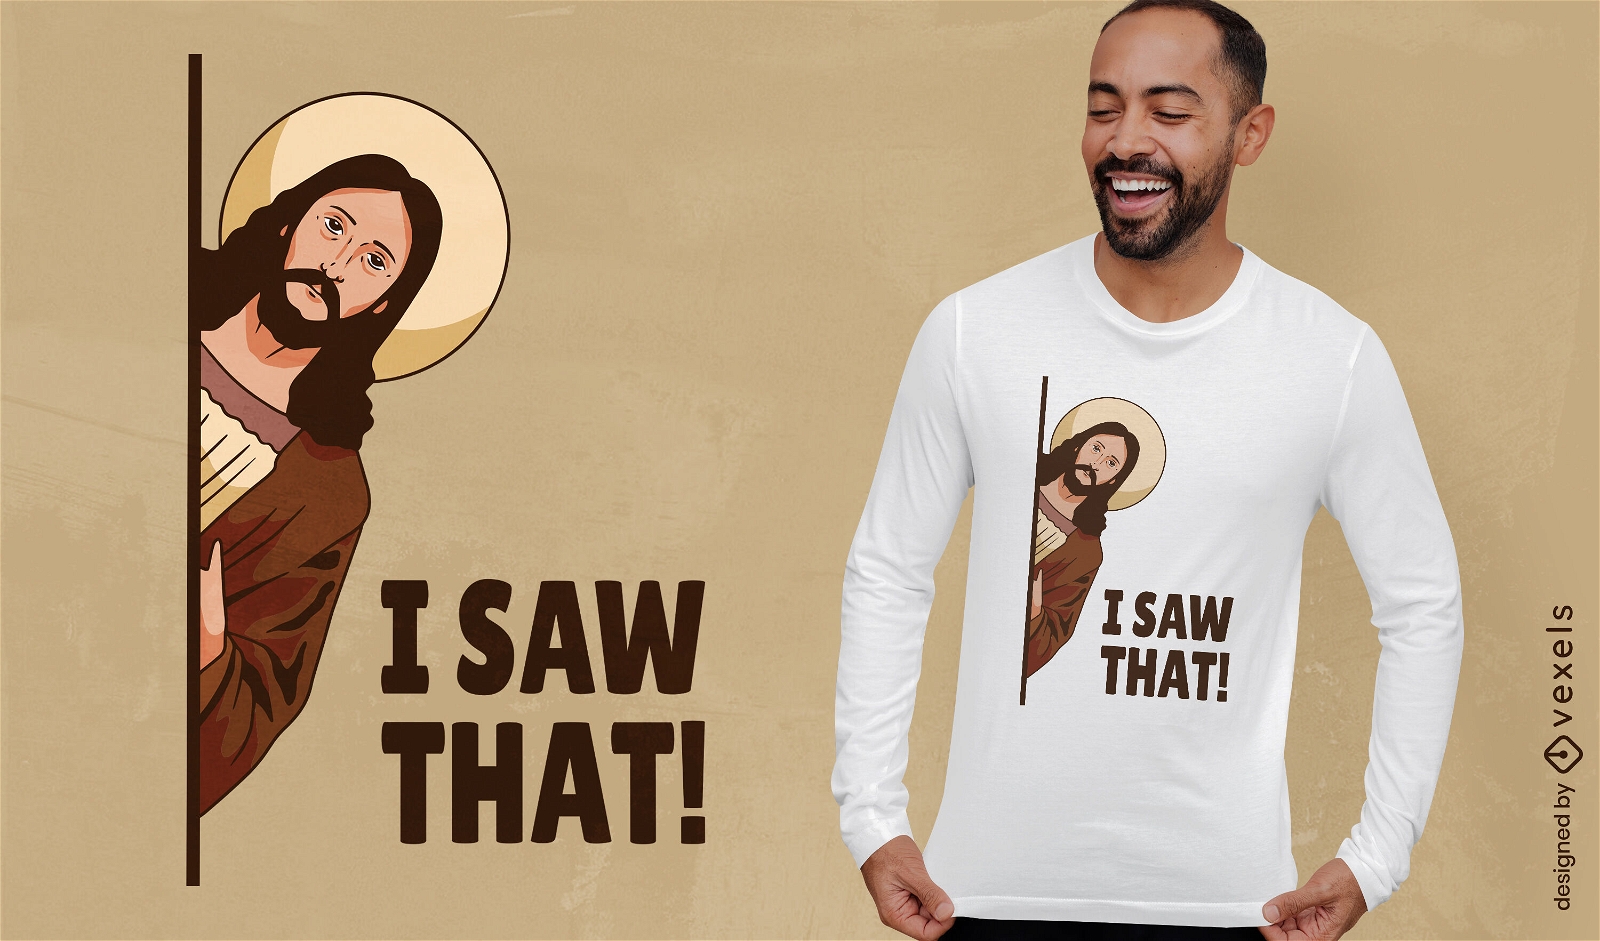 Jesus watching you t-shirt design